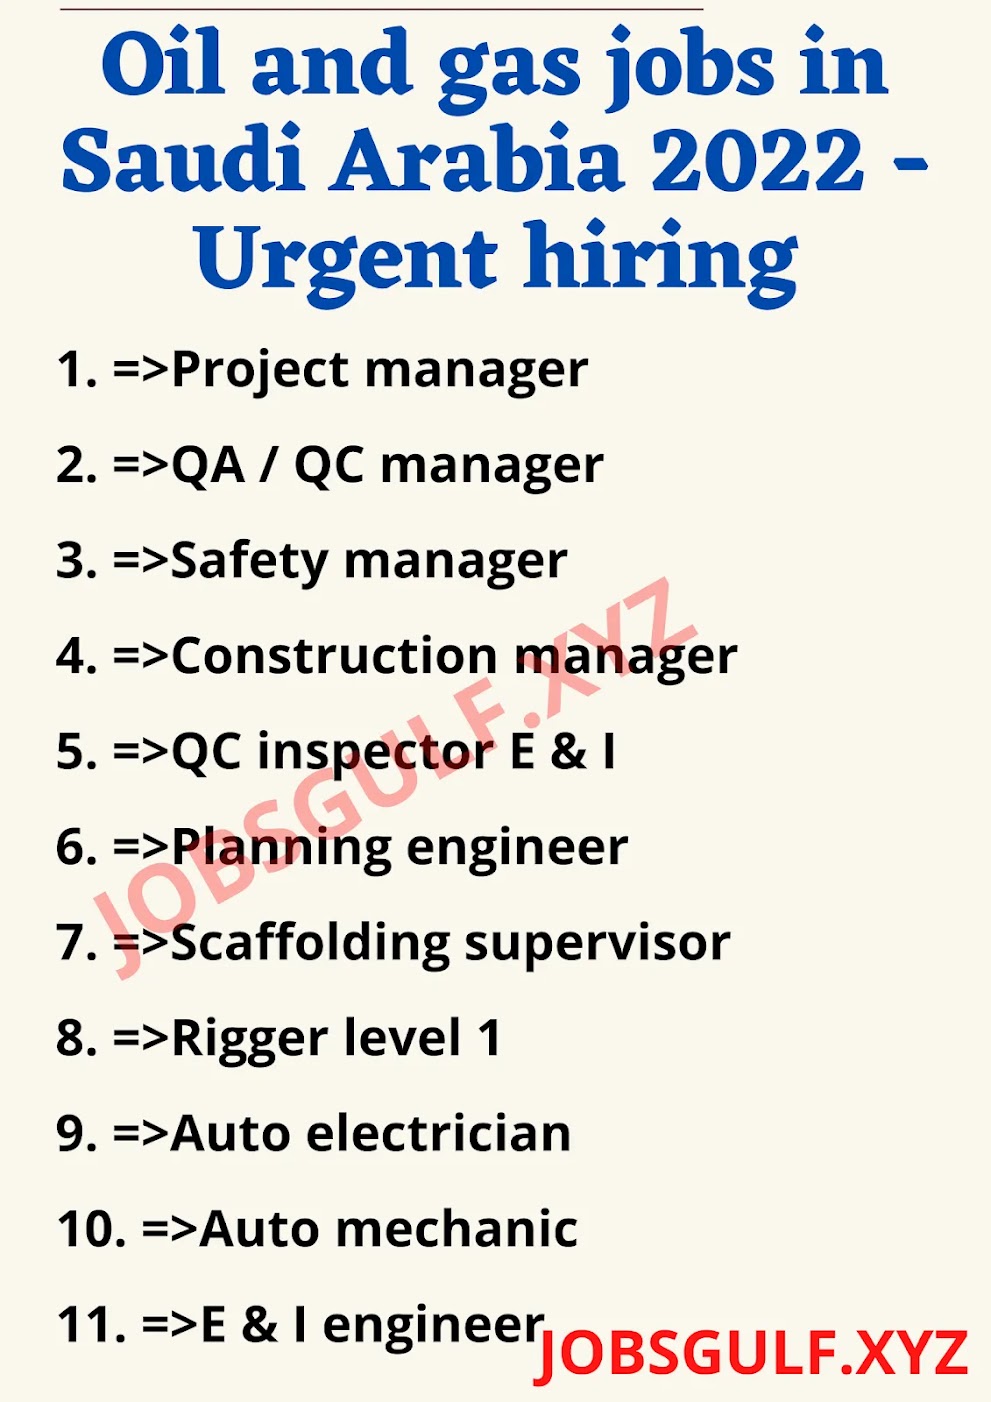 Oil and gas jobs in Saudi Arabia 2022 - Urgent hiring